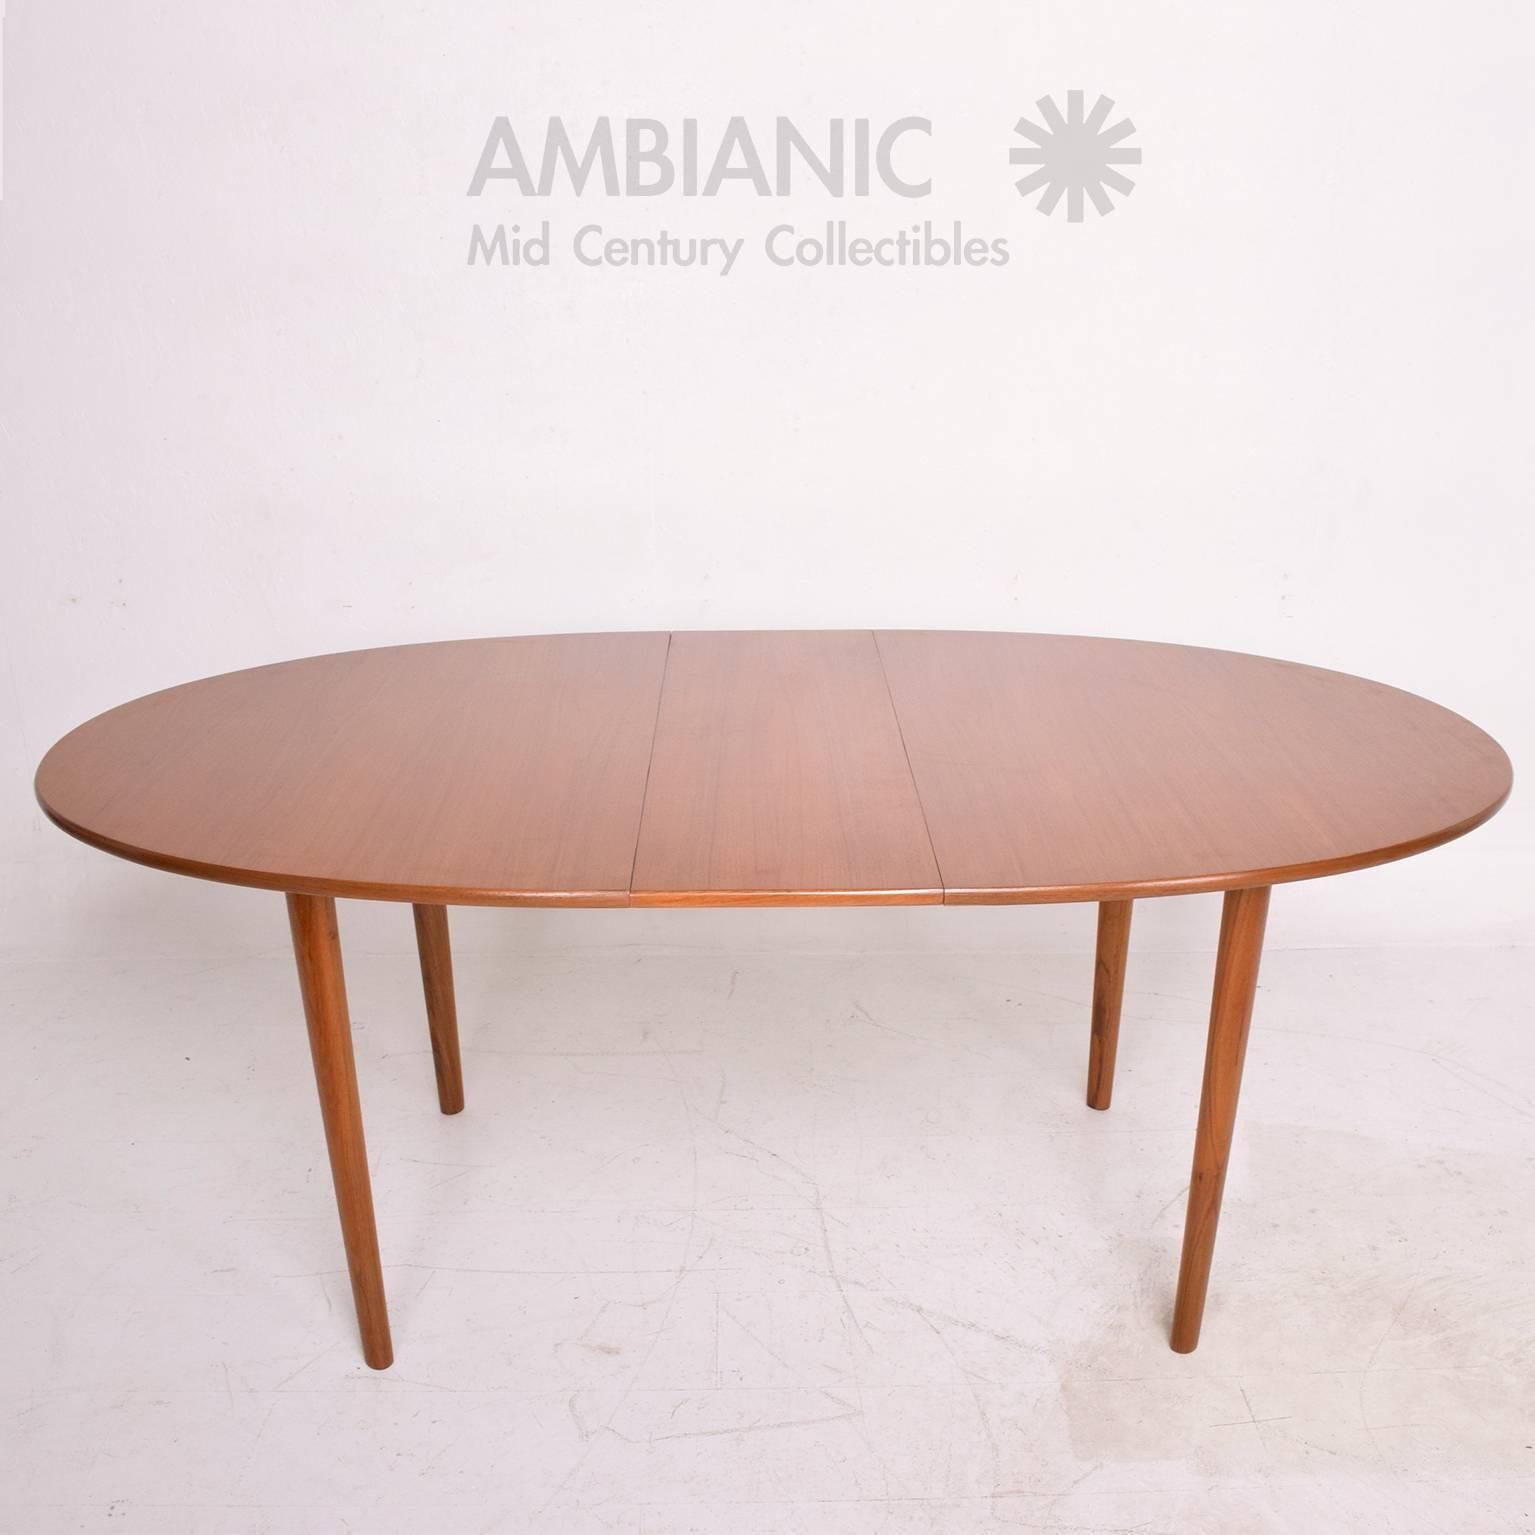 Scandinavian Modern Danish Modern Teak Dining Table Oval Shape with Extensions